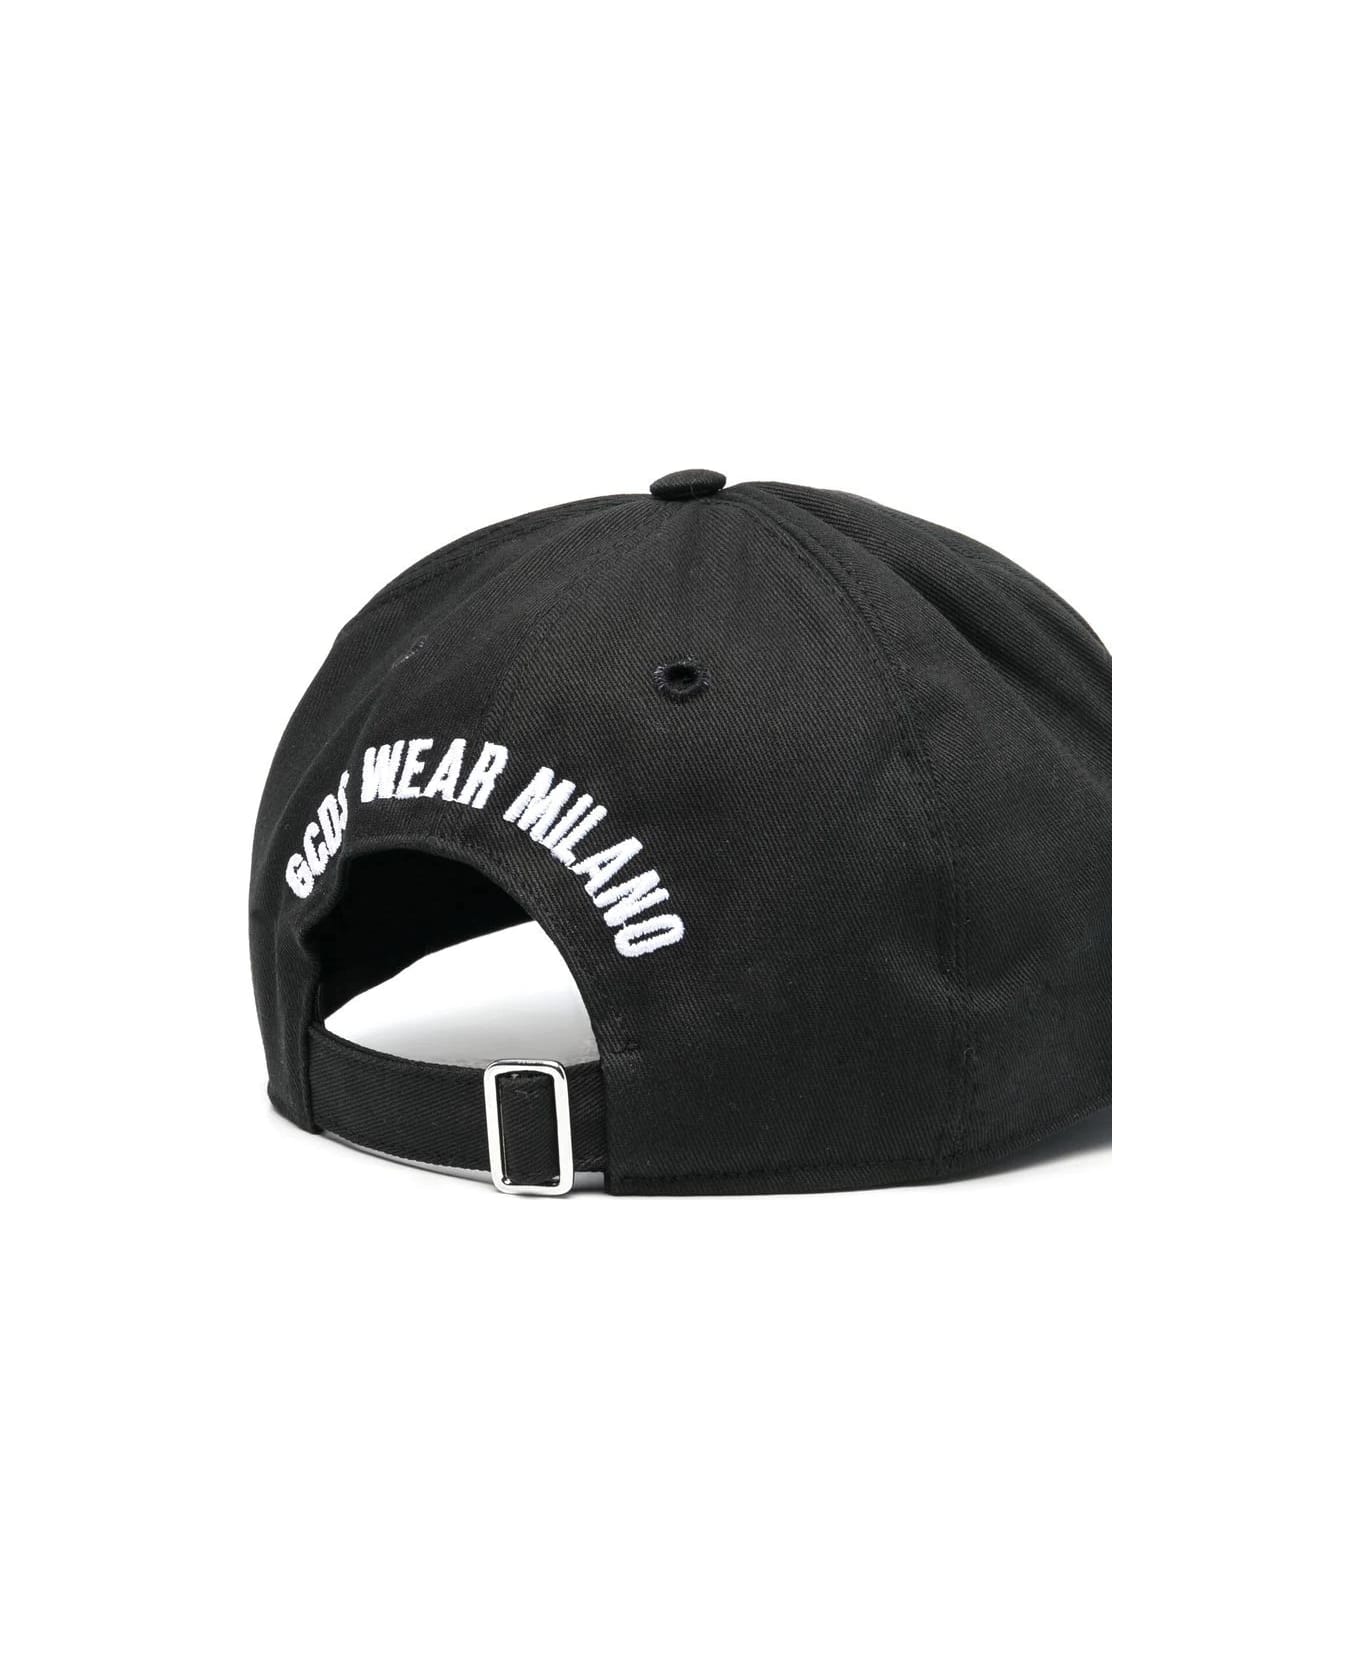 GCDS Mini Hat With Logo - Black